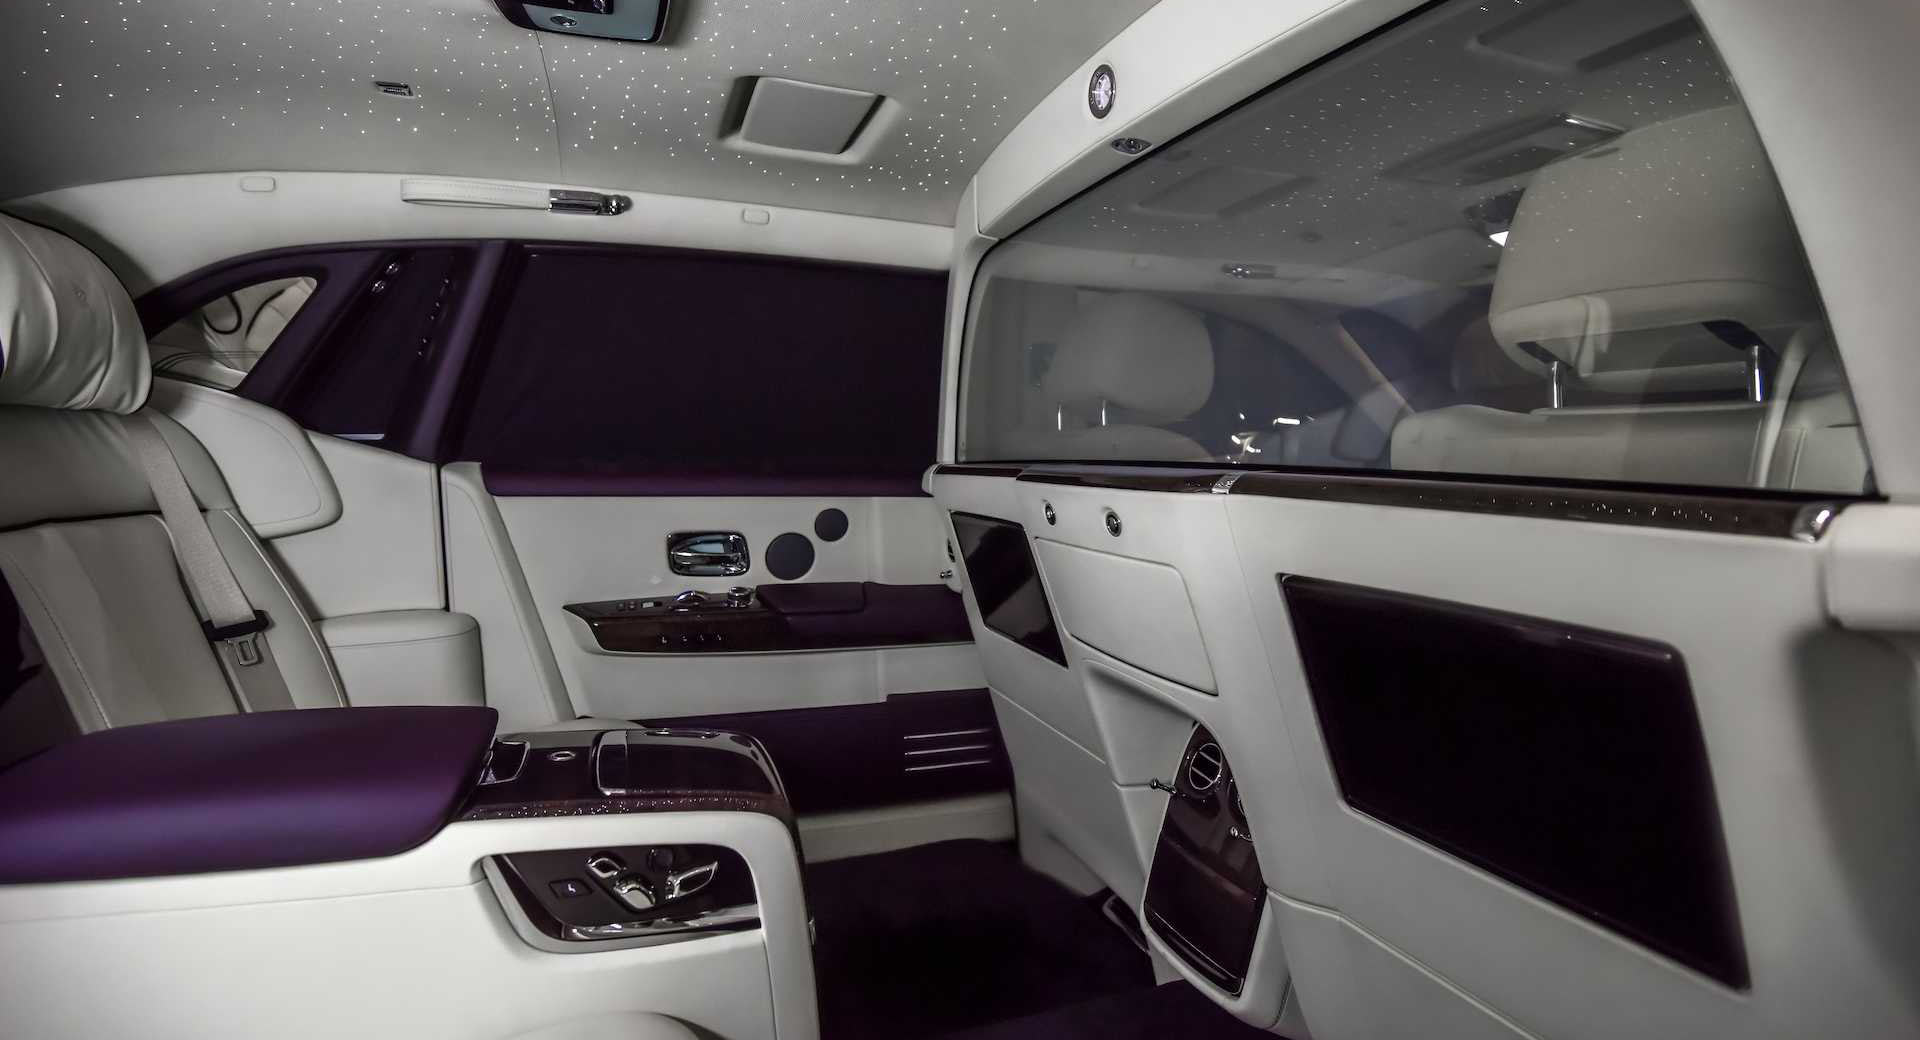 This Rolls Royce Phantom Has A Purple And White Interior